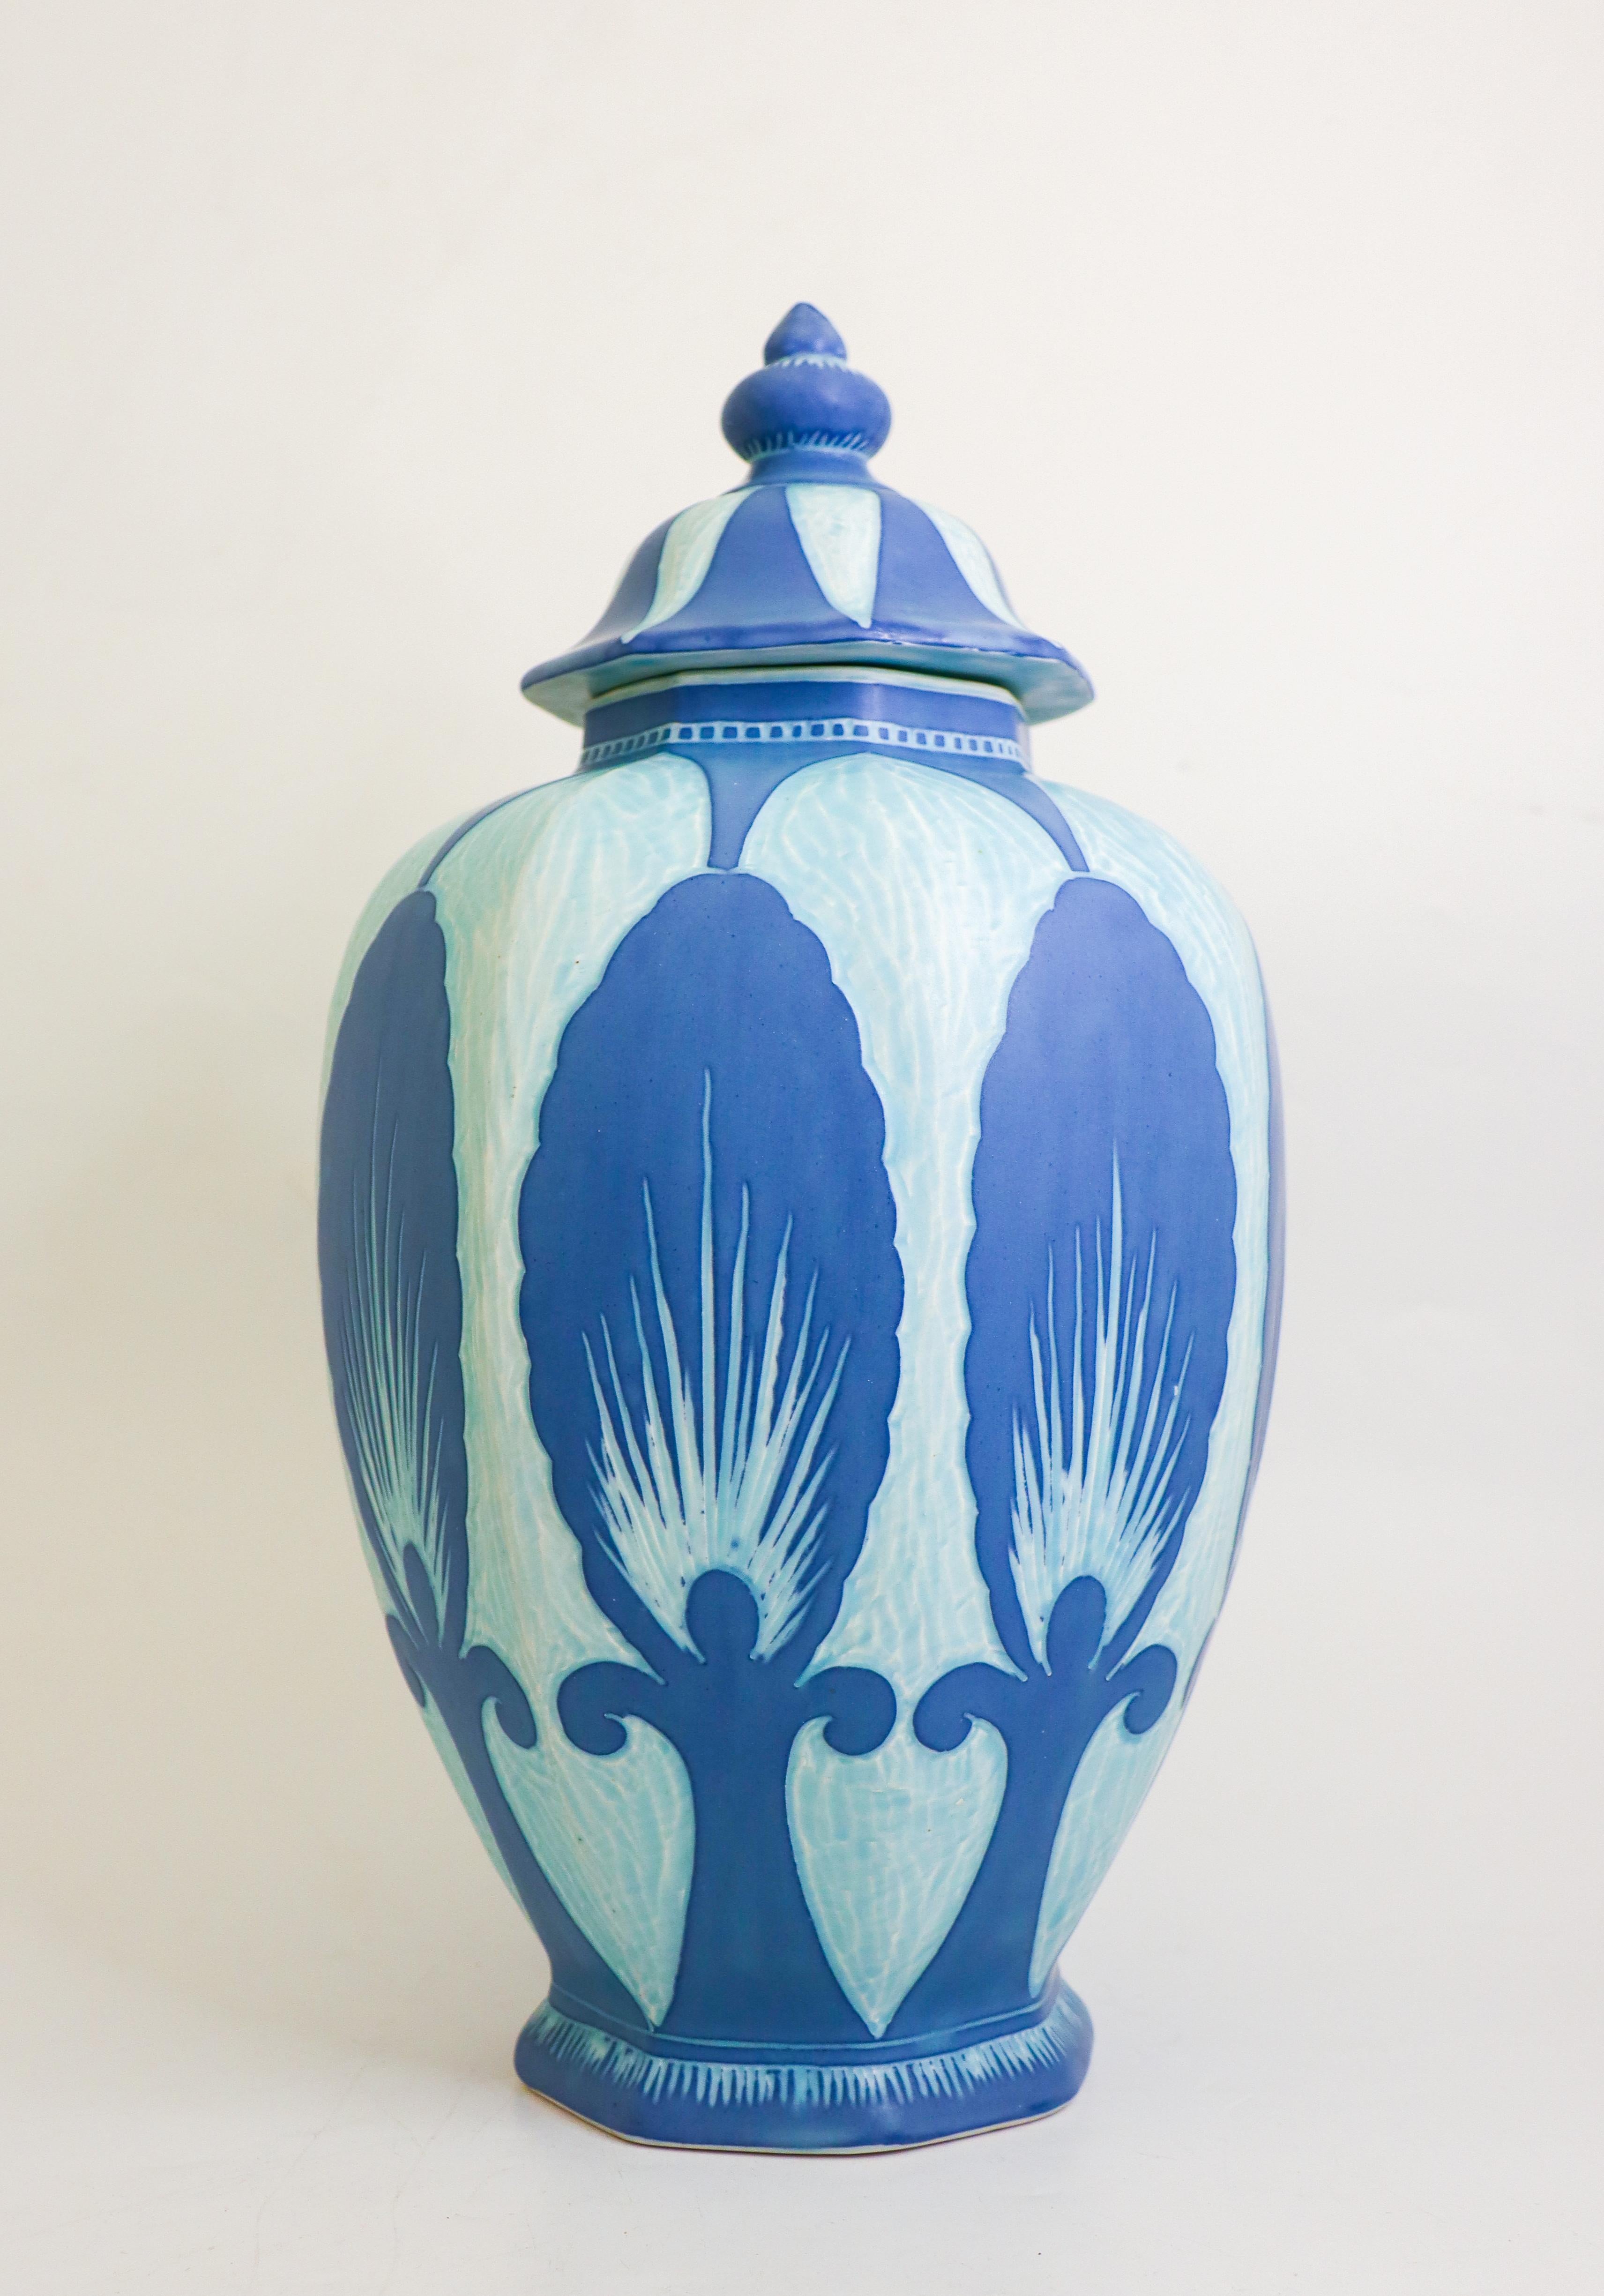 Rare Art Nouveau Ceramic Urn Turquoise & Blue Josef Ekberg Sgrafitto 1925 For Sale 1